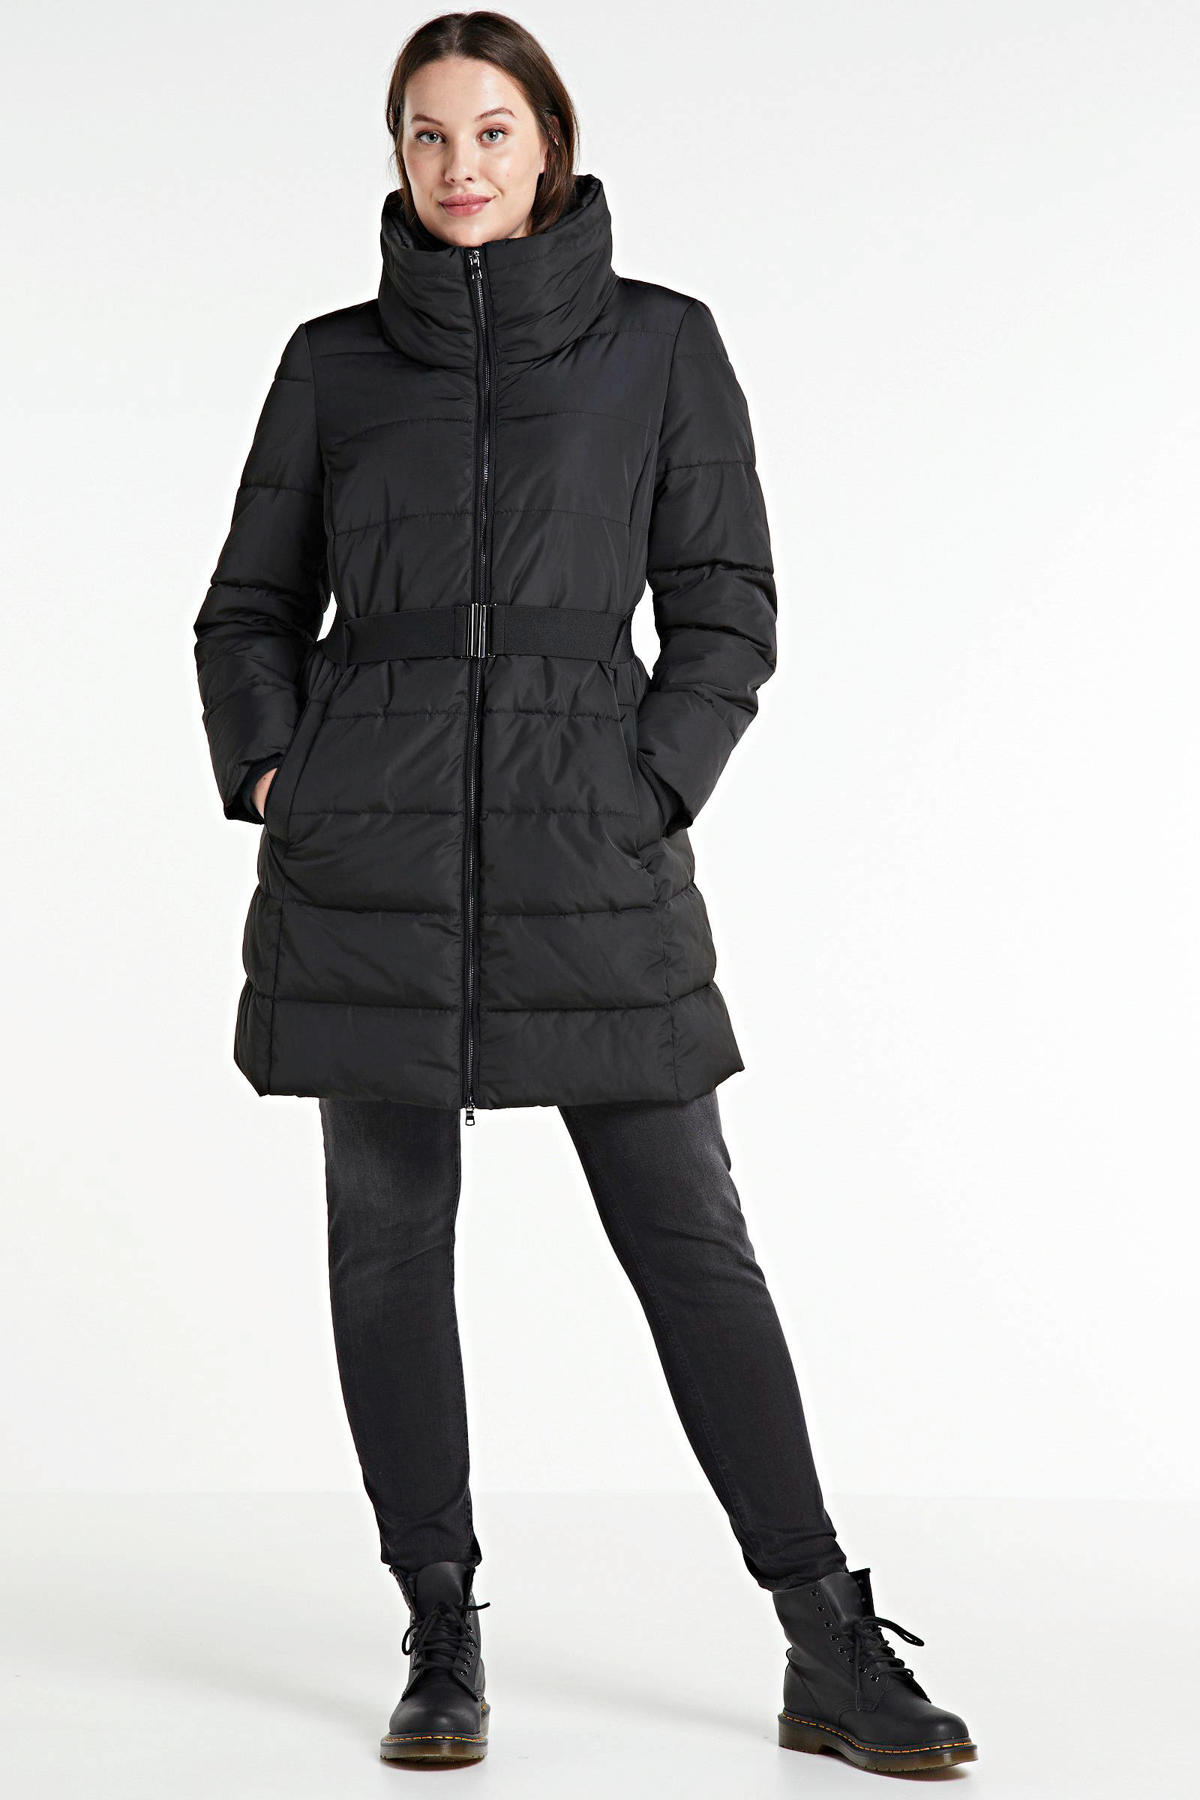 toeter Glad Internationale anytime winterjas Plus size zwart | wehkamp